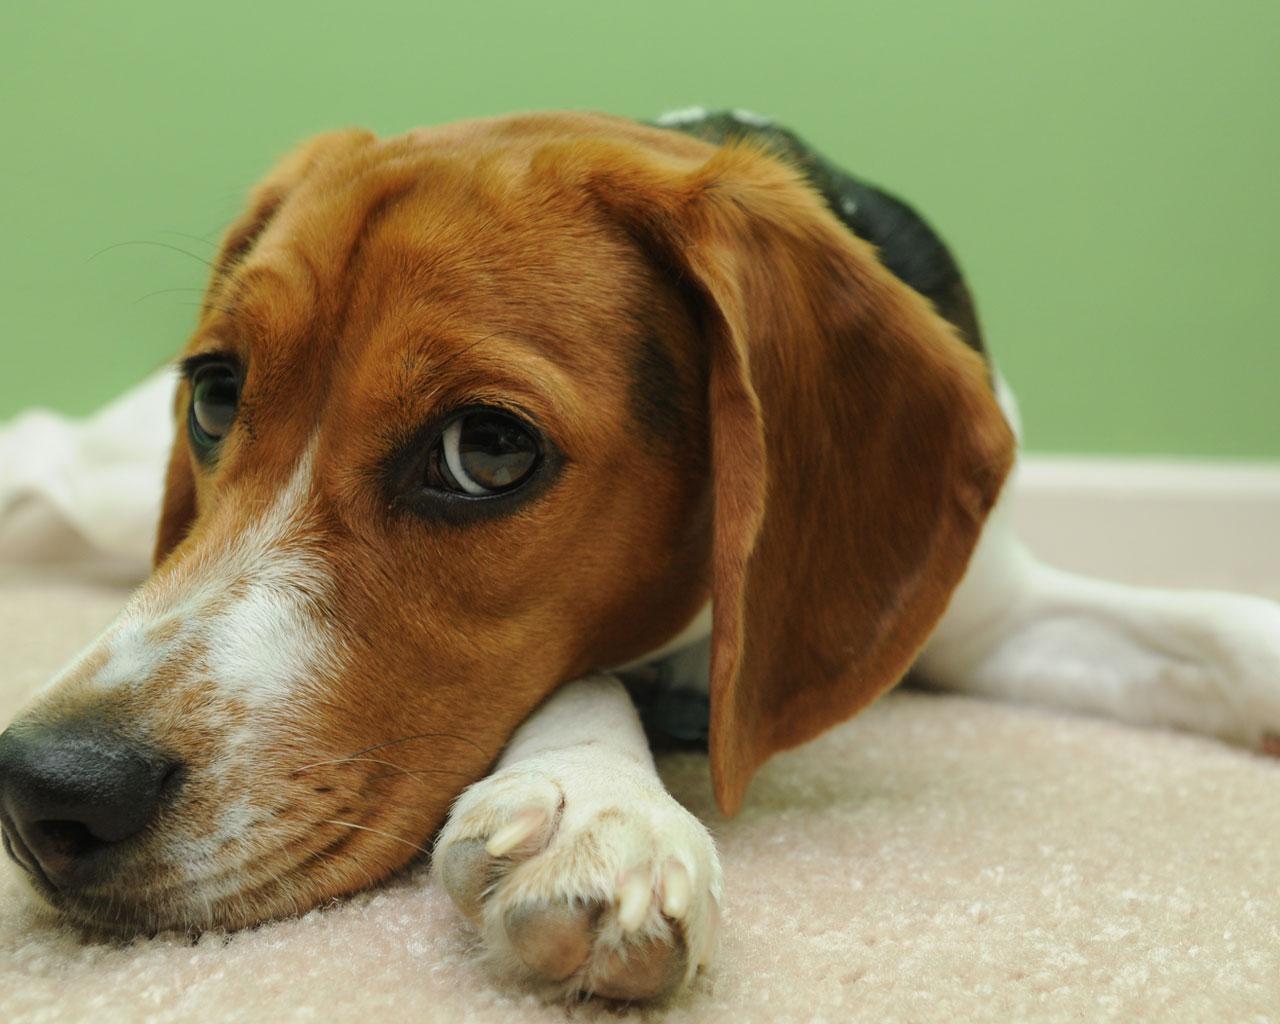 Beagle - In Contemplative Mood Wallpaper #4 1280 x 1024 